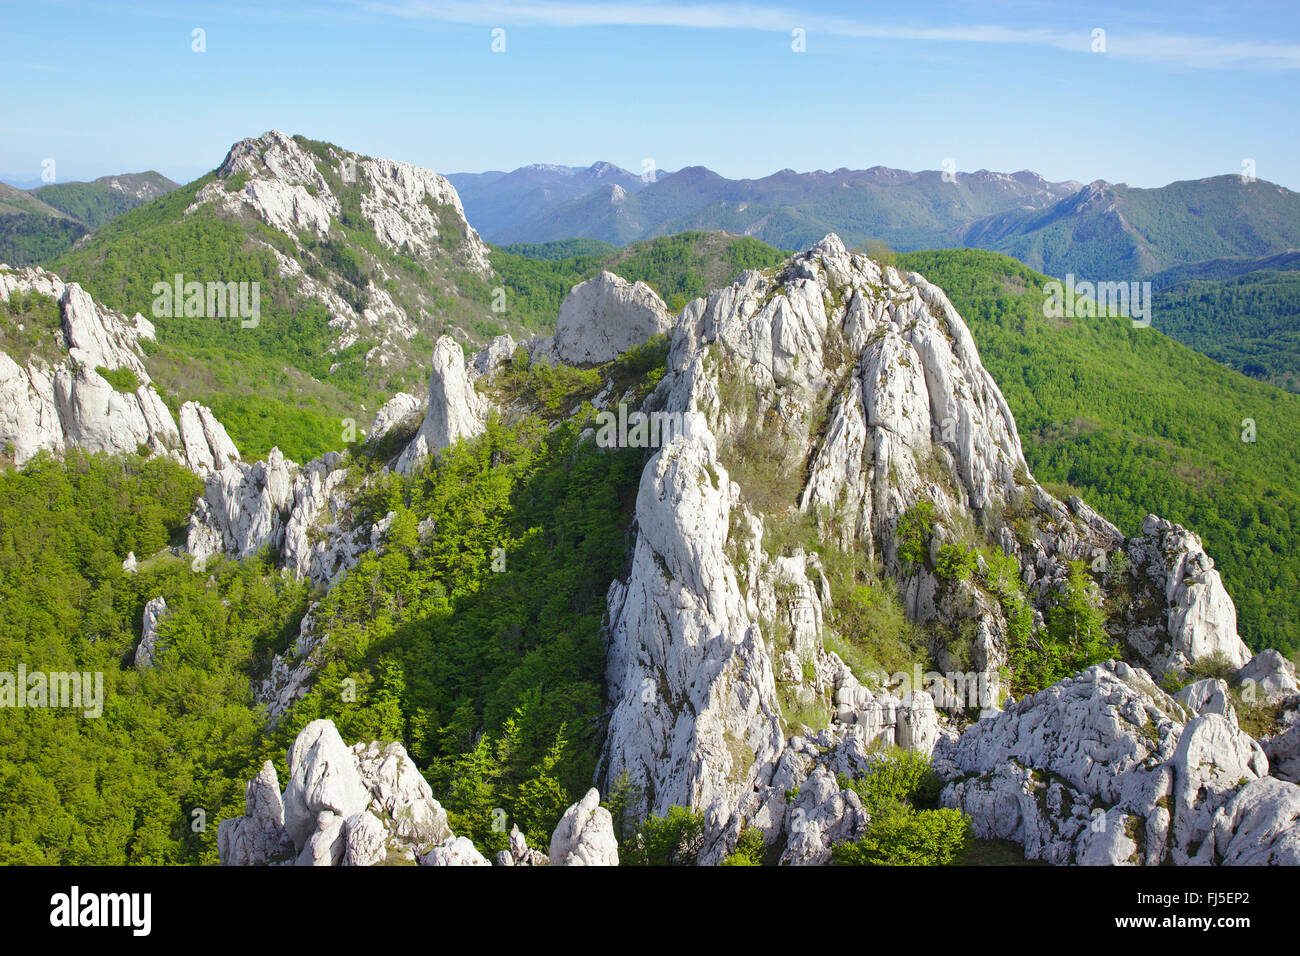 limestone rocks in the Velebit mountain range, view from Kiza to Kuk od Karline Plane, Croatia Stock Photo